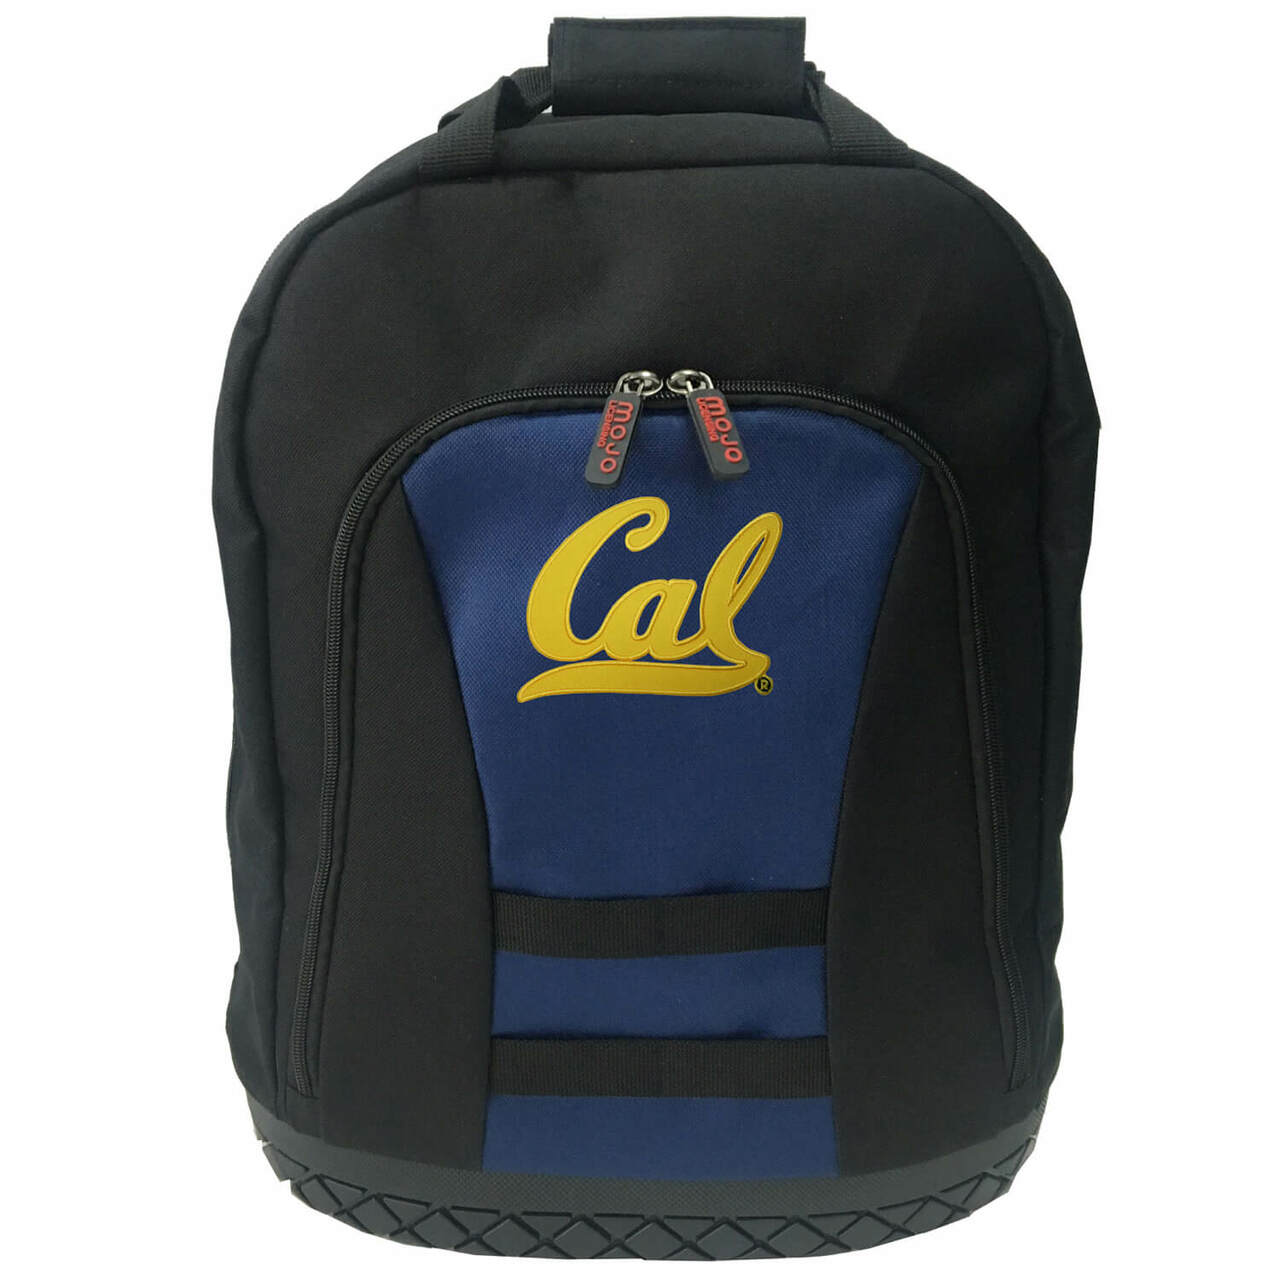 California Bears Tool Bag Backpack